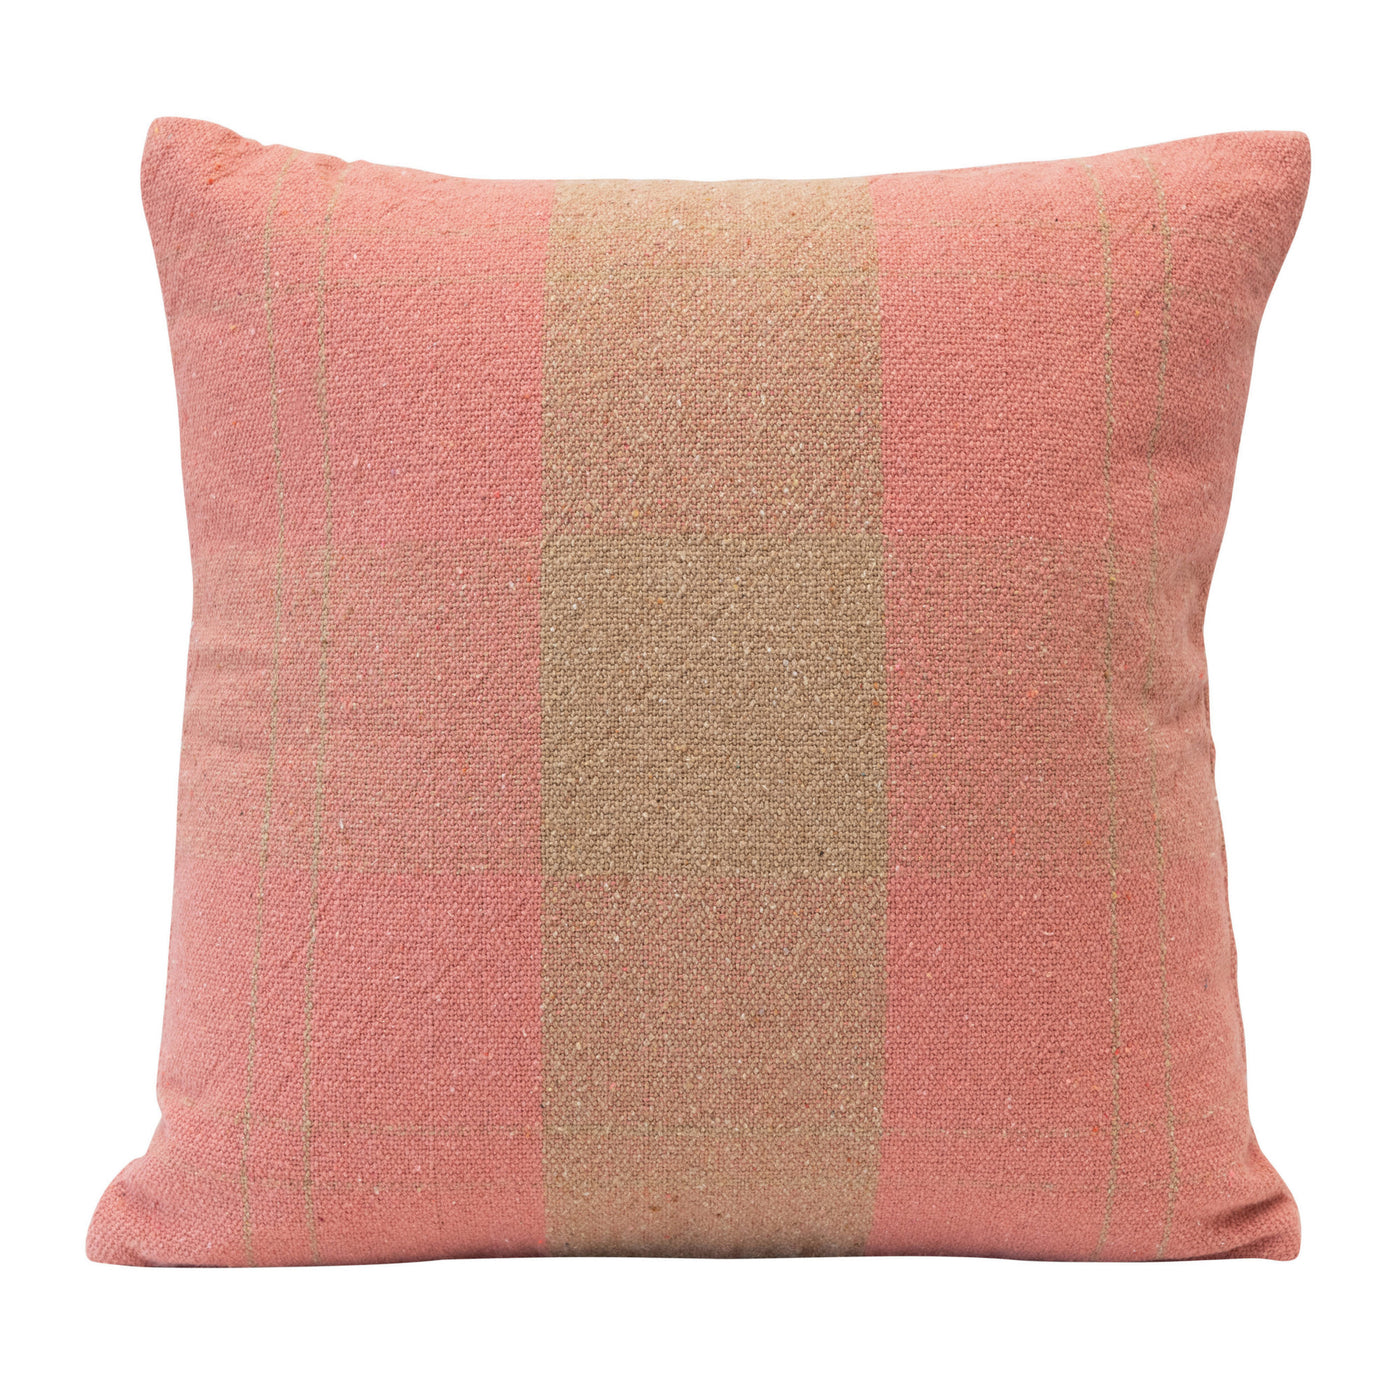 20" Square Woven Cotton Blend Plaid Pillow- Pink & Tan